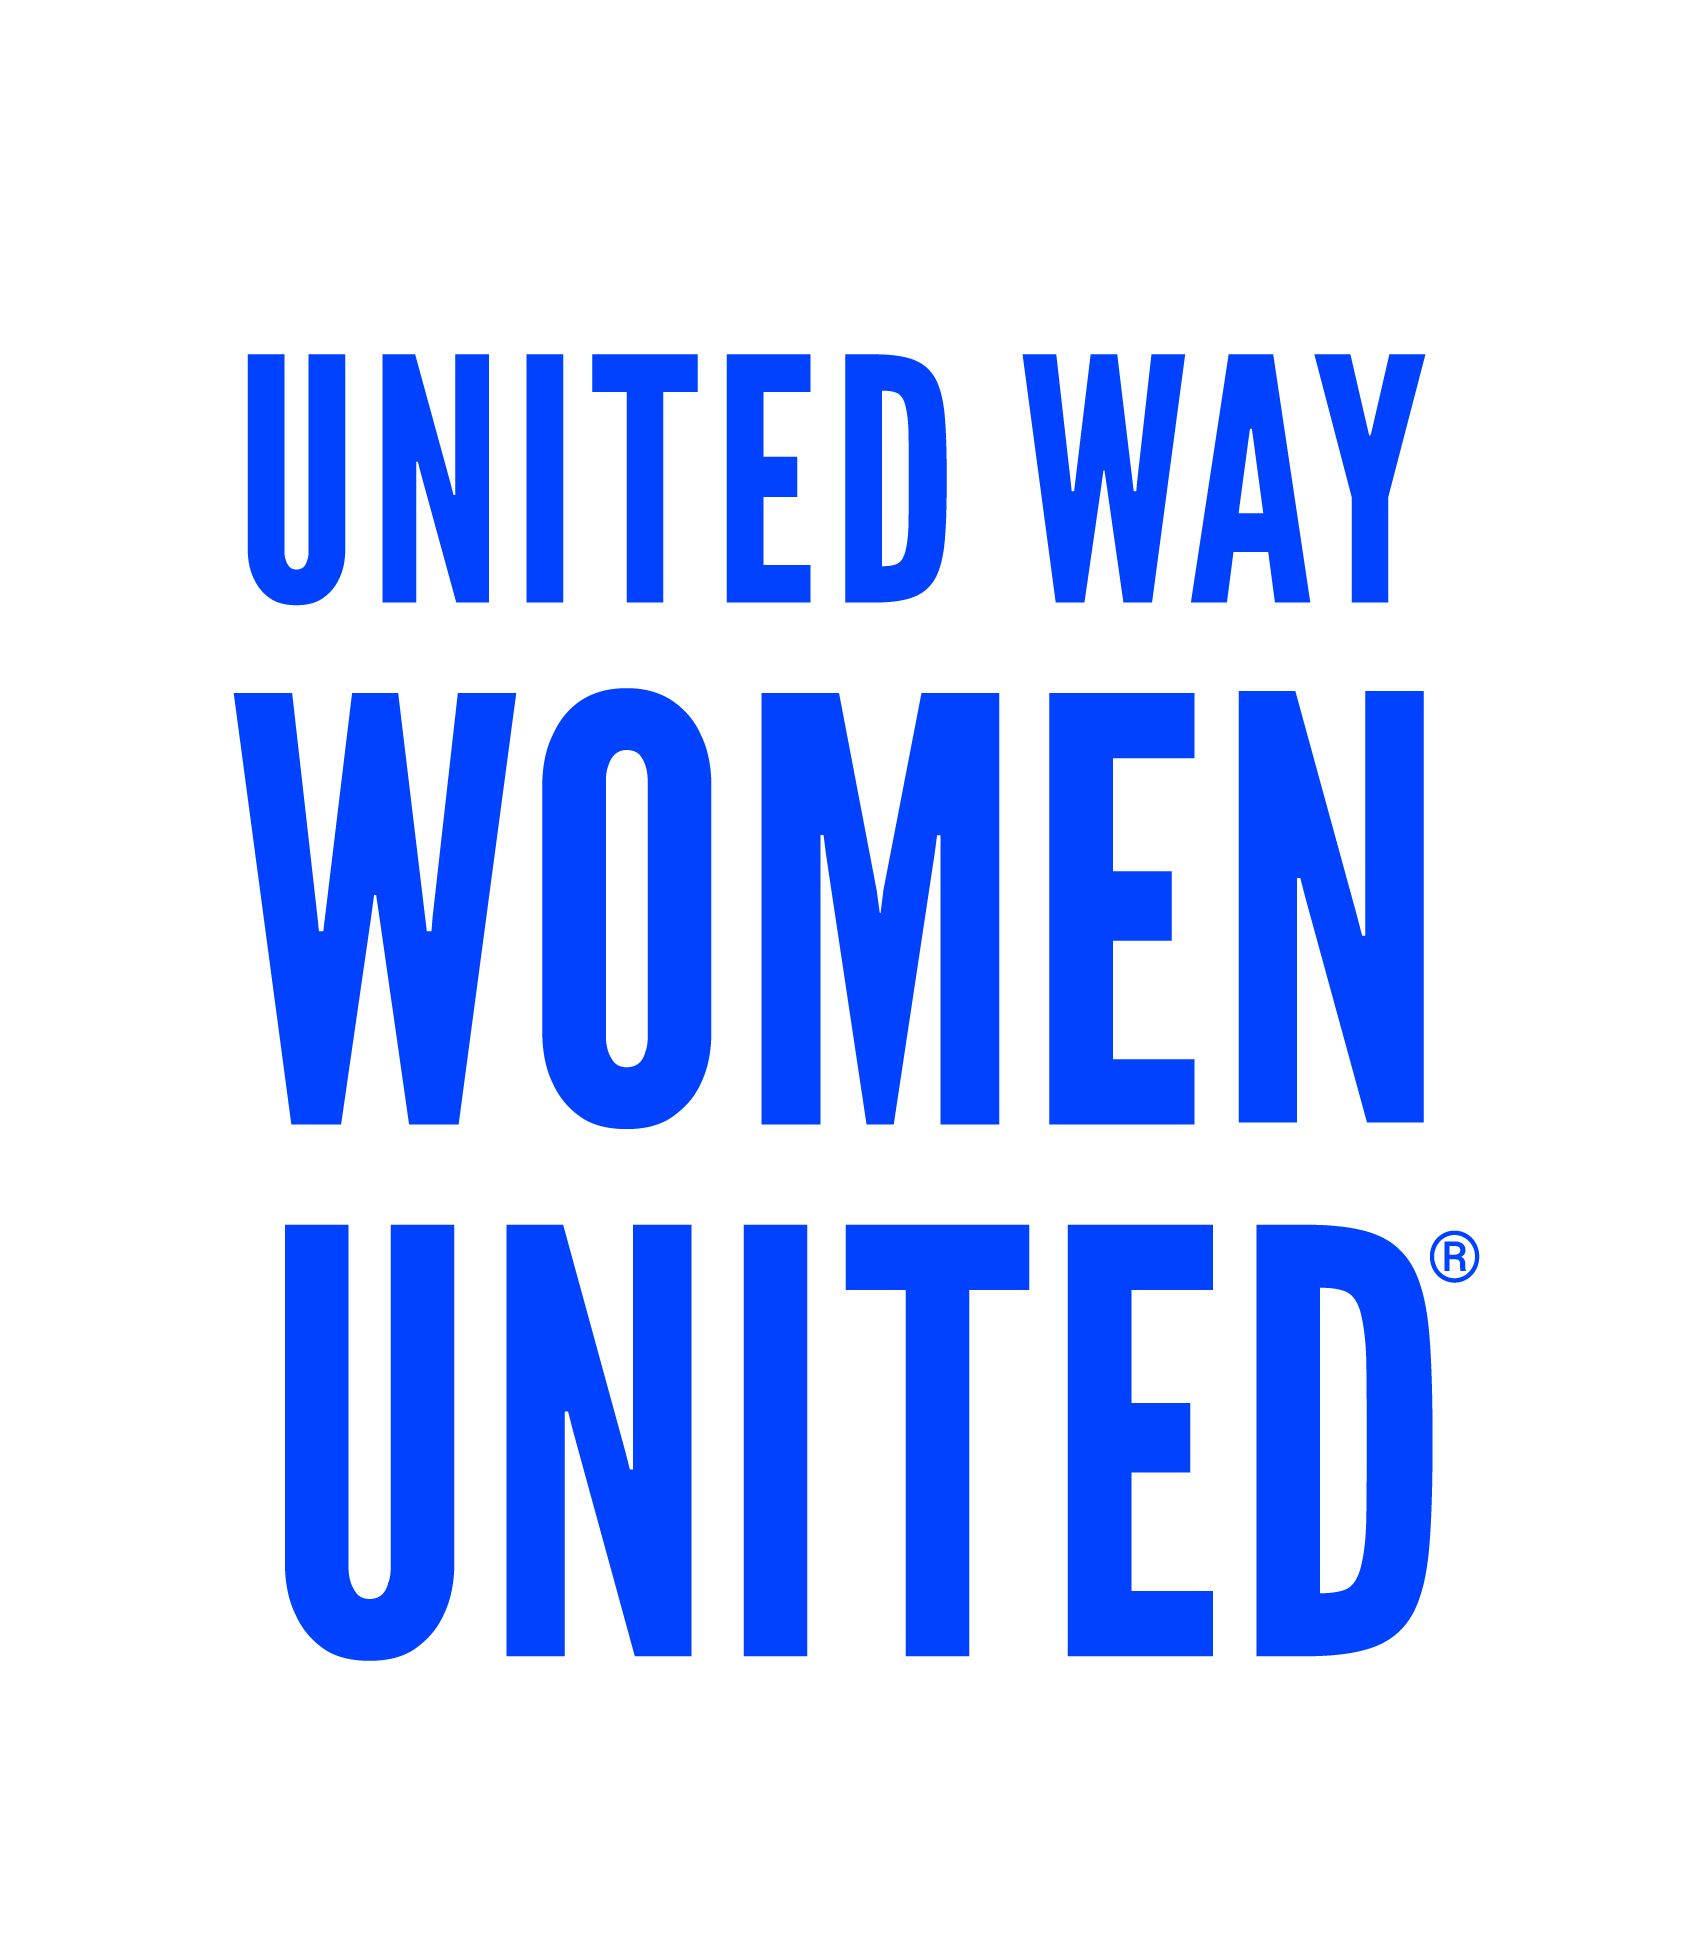 Women United